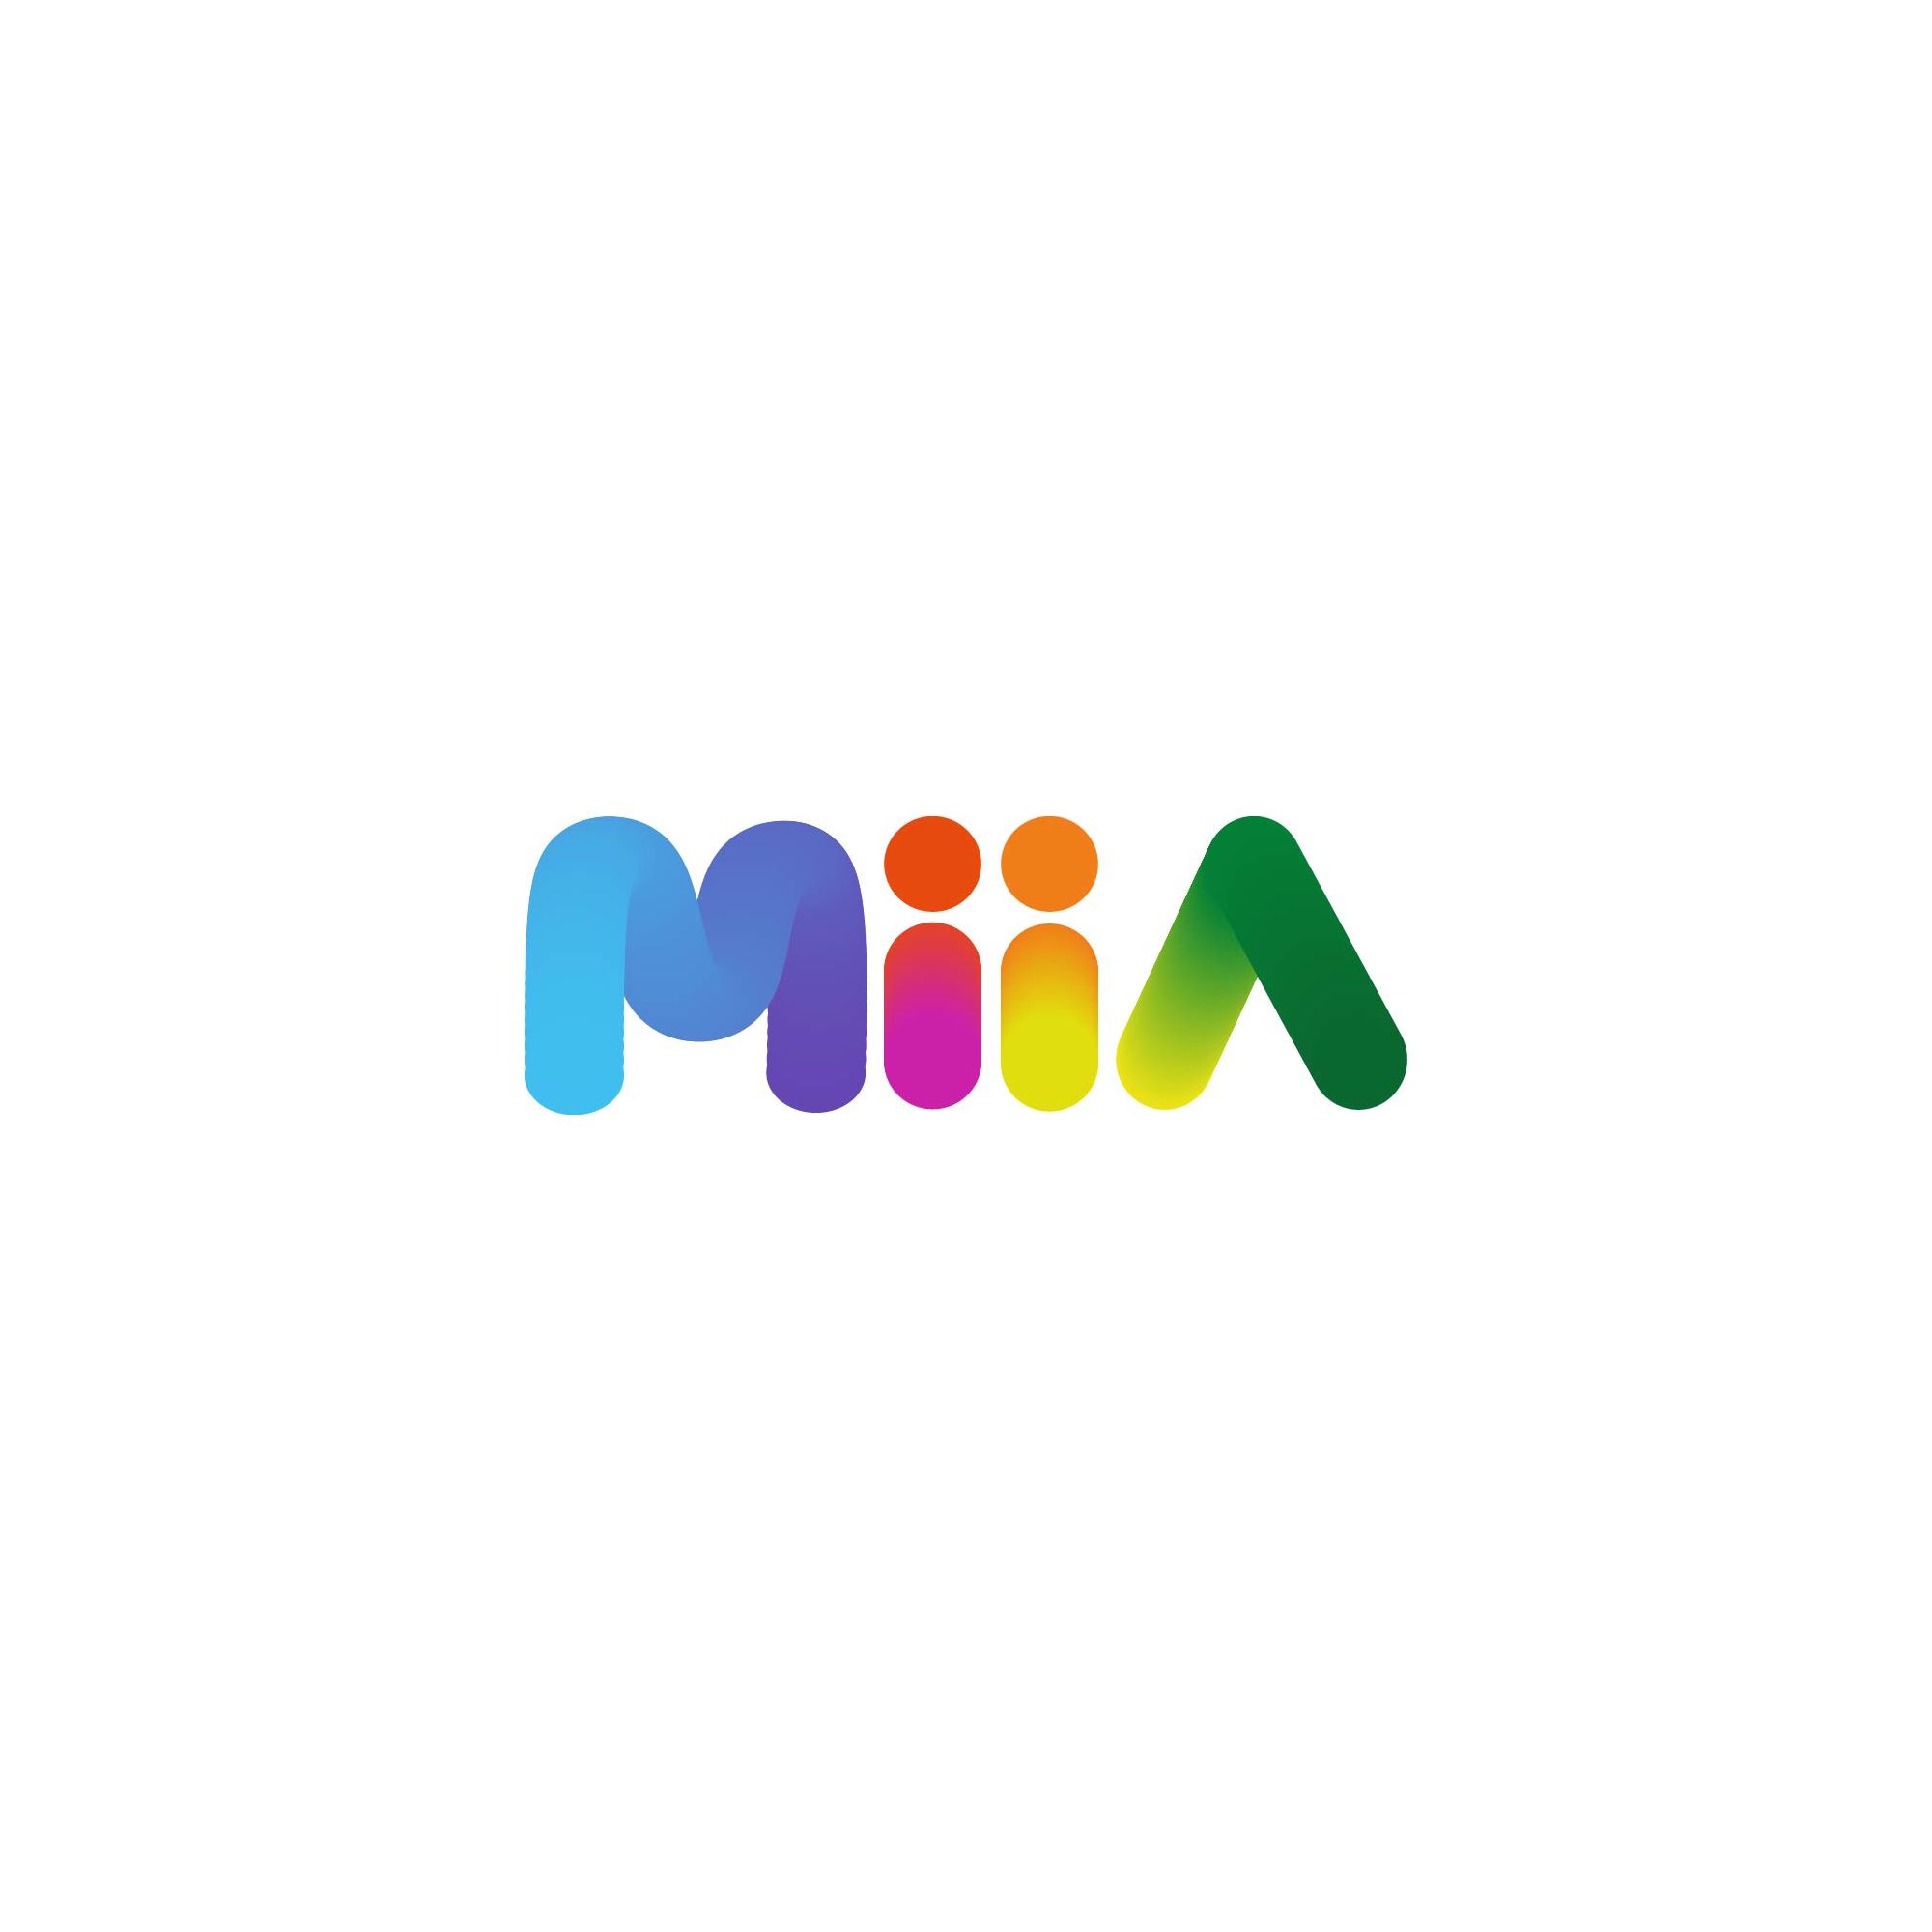 MiiA: Inteligencia Artificial gratis en tu WhatsApp